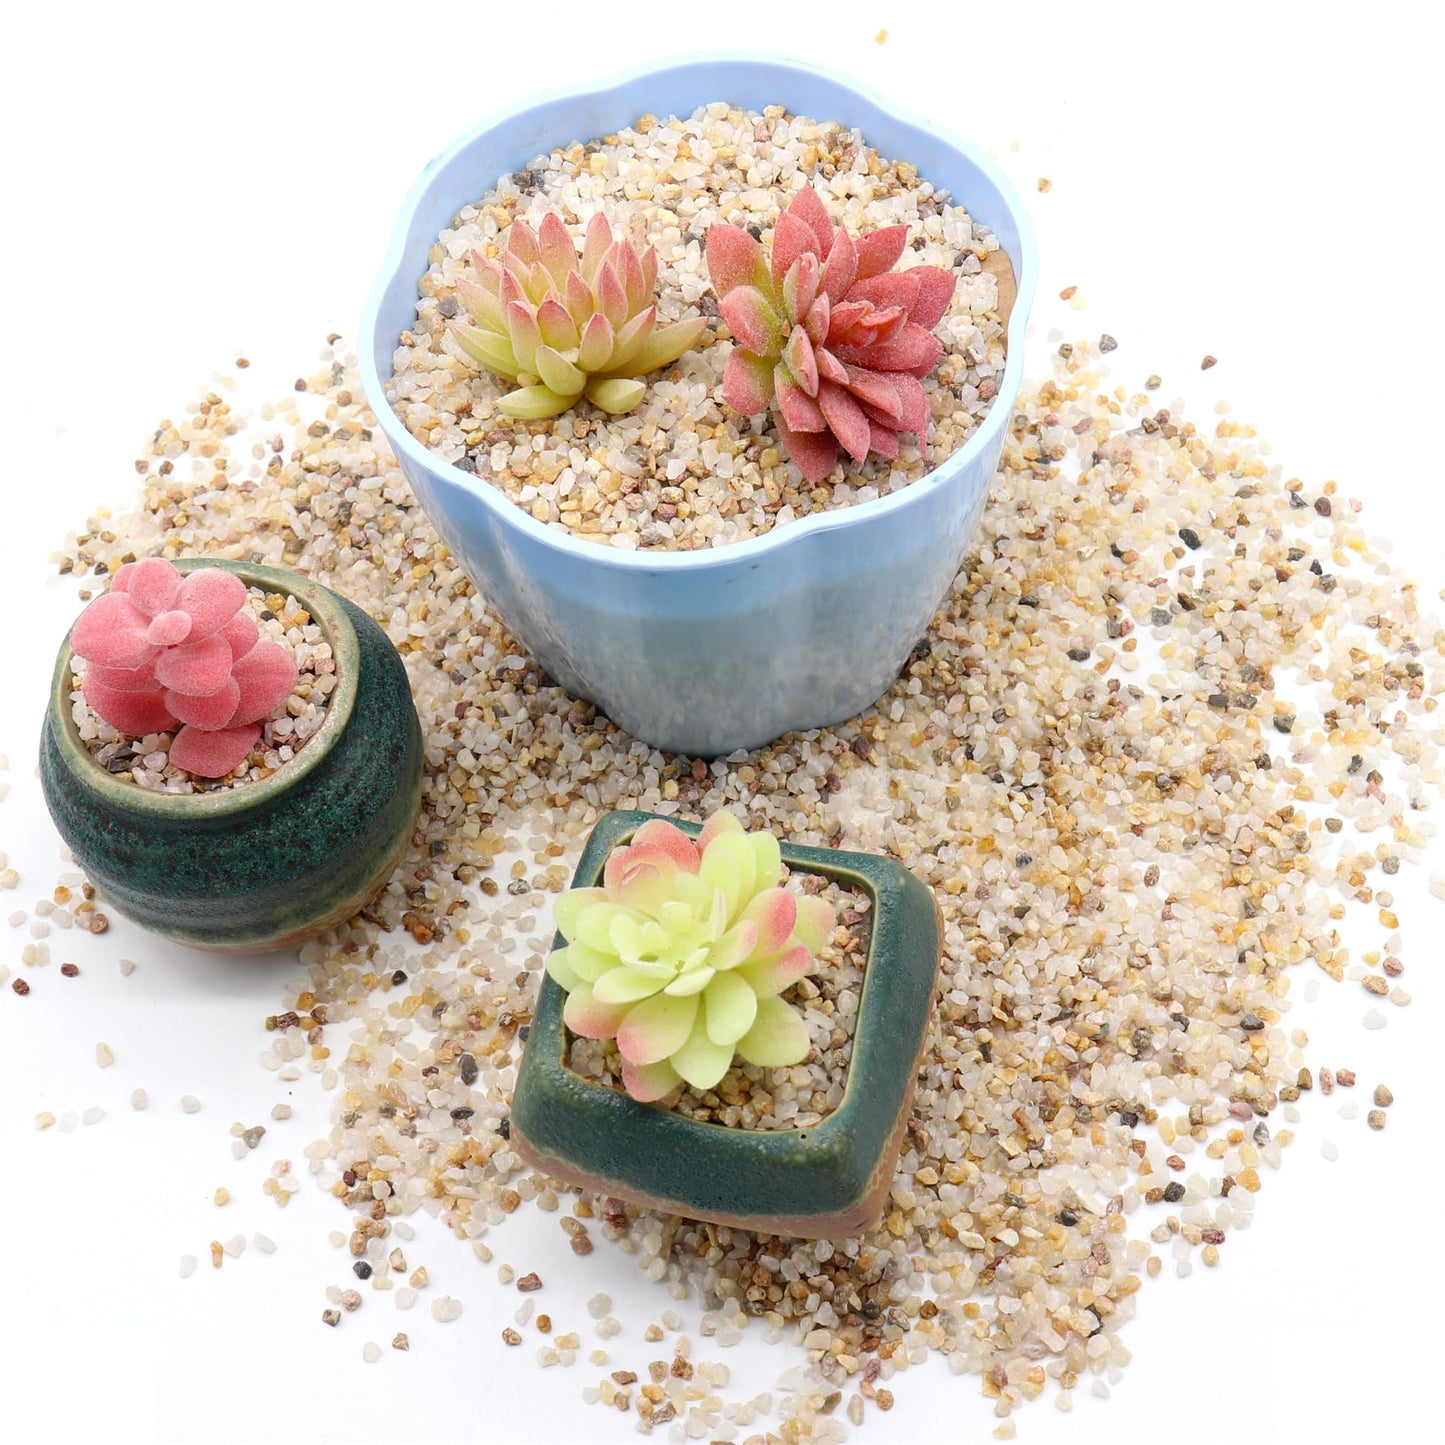 Premium Pebbles Coarse Sand. Golden Color. 1/8 Inch 5 lbs. for Potting Soil, Succulents, Pots, Plants, Gardening, Indoor, Crafting, Vase Fillers (X-Mini (0.125 Inch), COARSE Sand - Golden, 5)